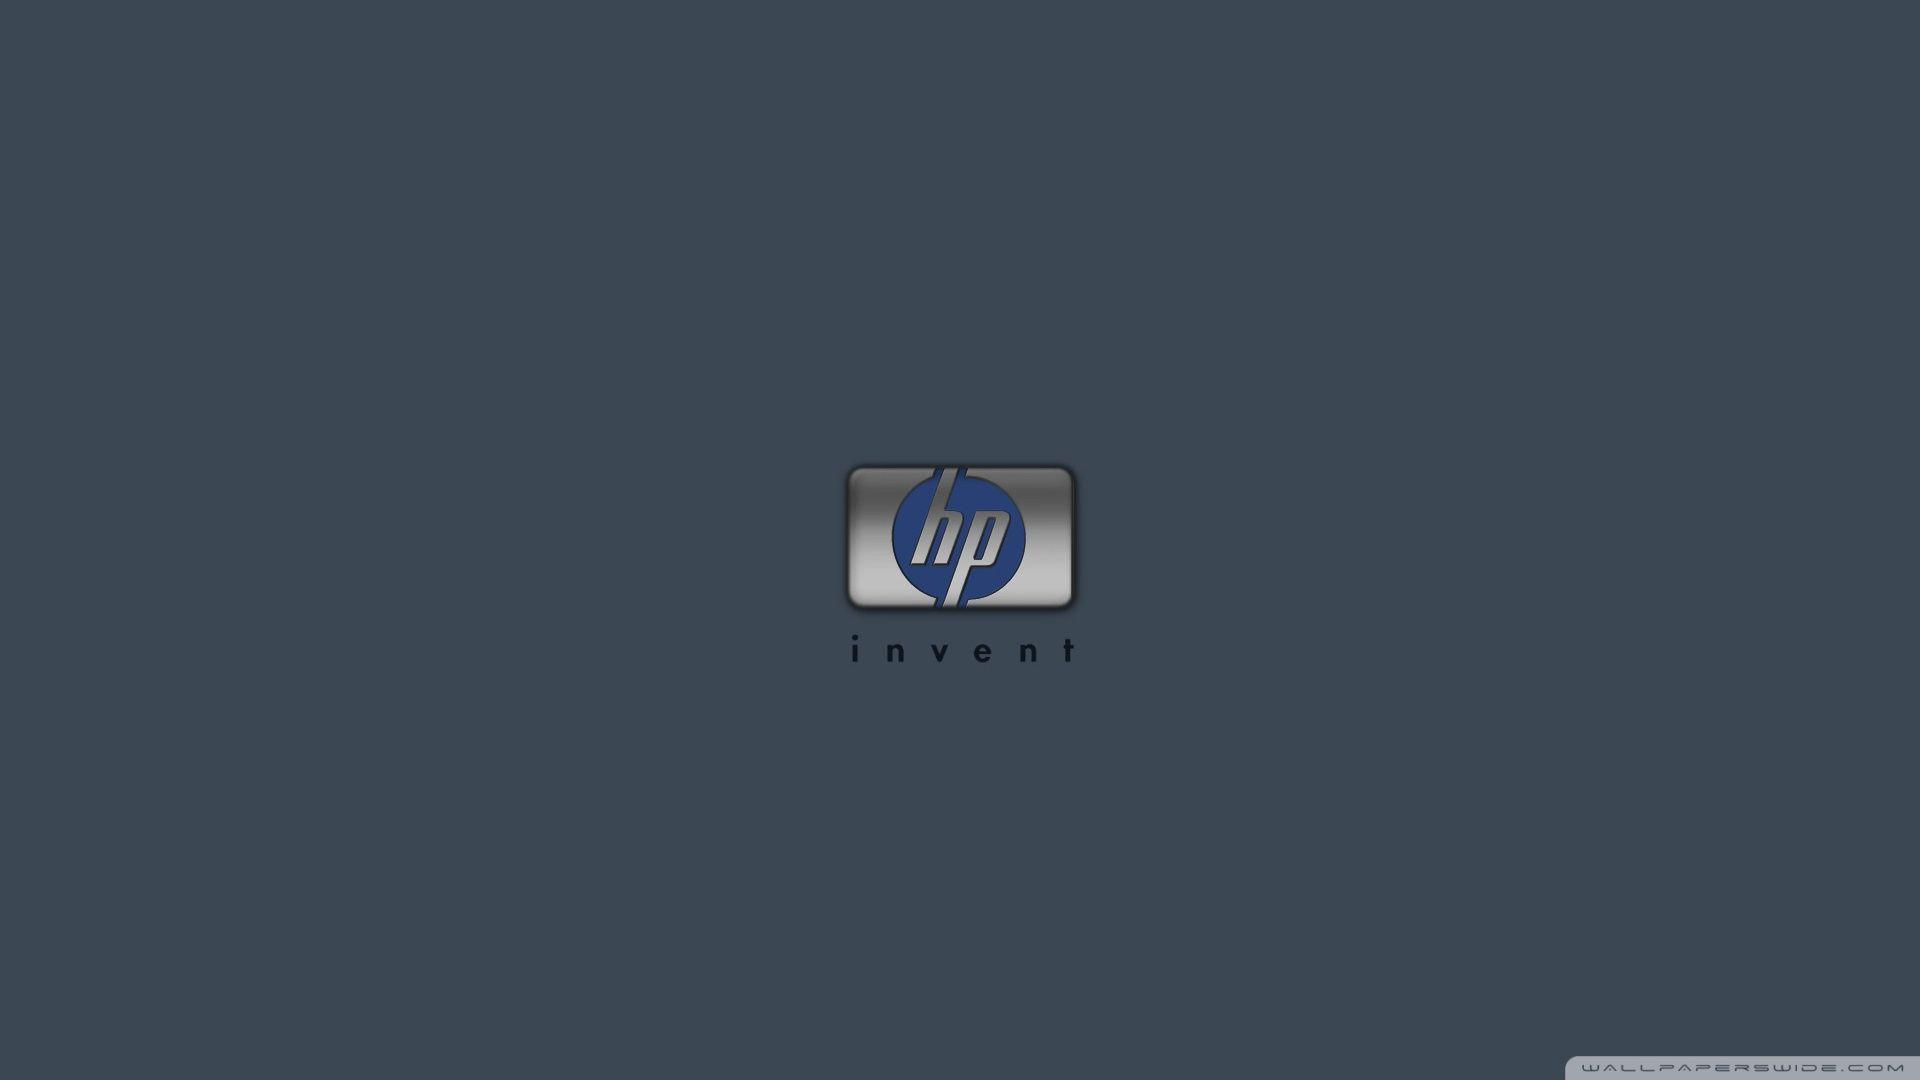 Laptop HP Invent Logo - Download Wallpaper Hp Laptop Free Download Gallery 1920×1080 ...